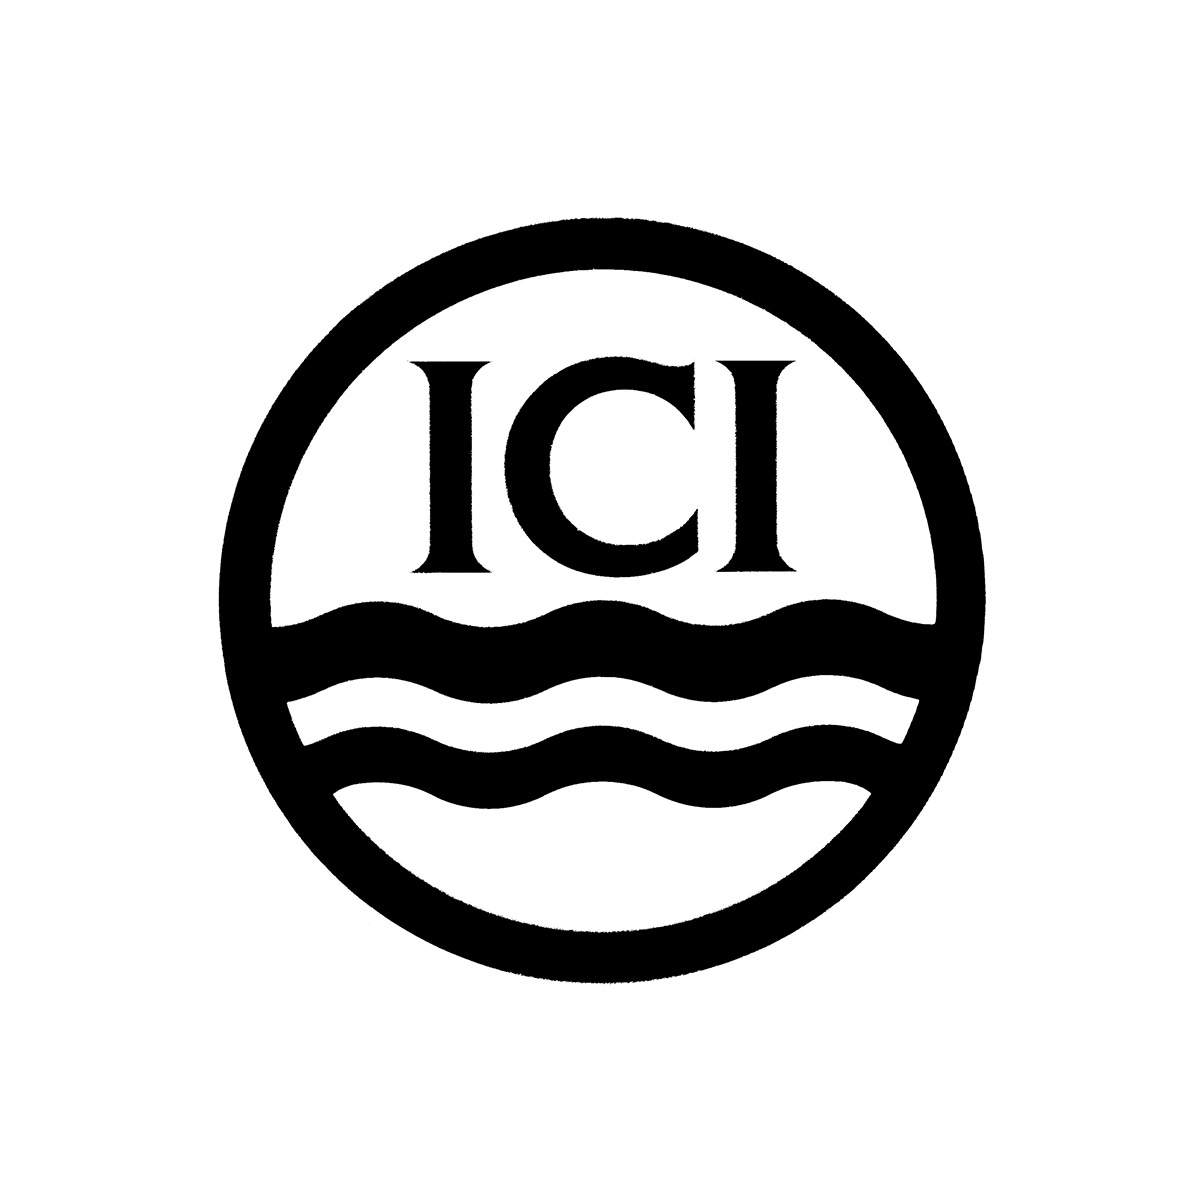 Design Research Unit’s 1969 corporate identity for ICI